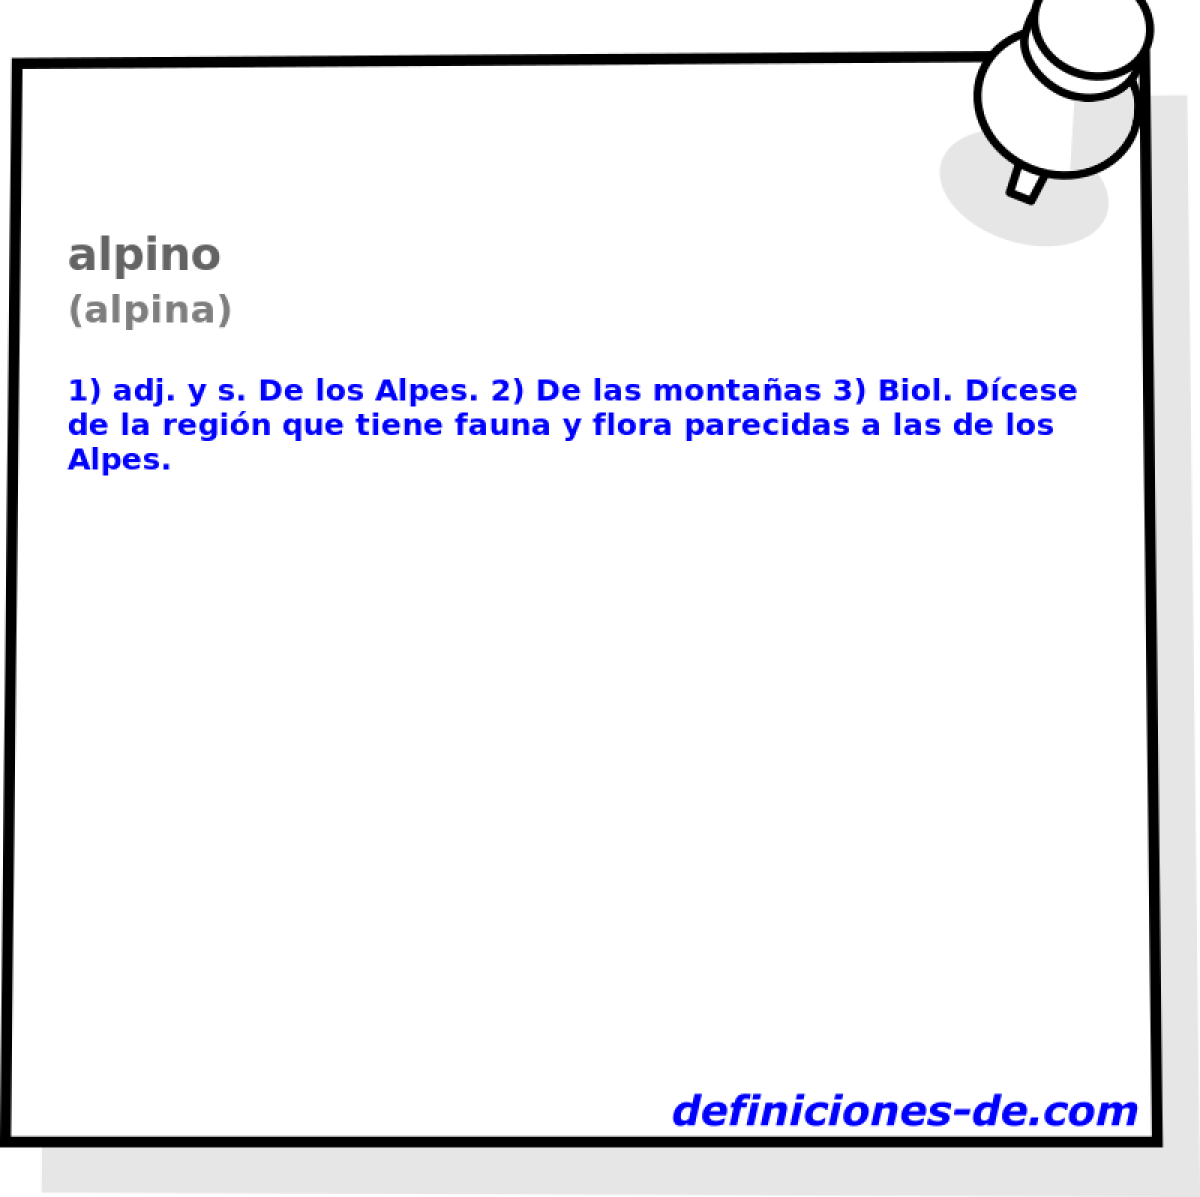 alpino (alpina)